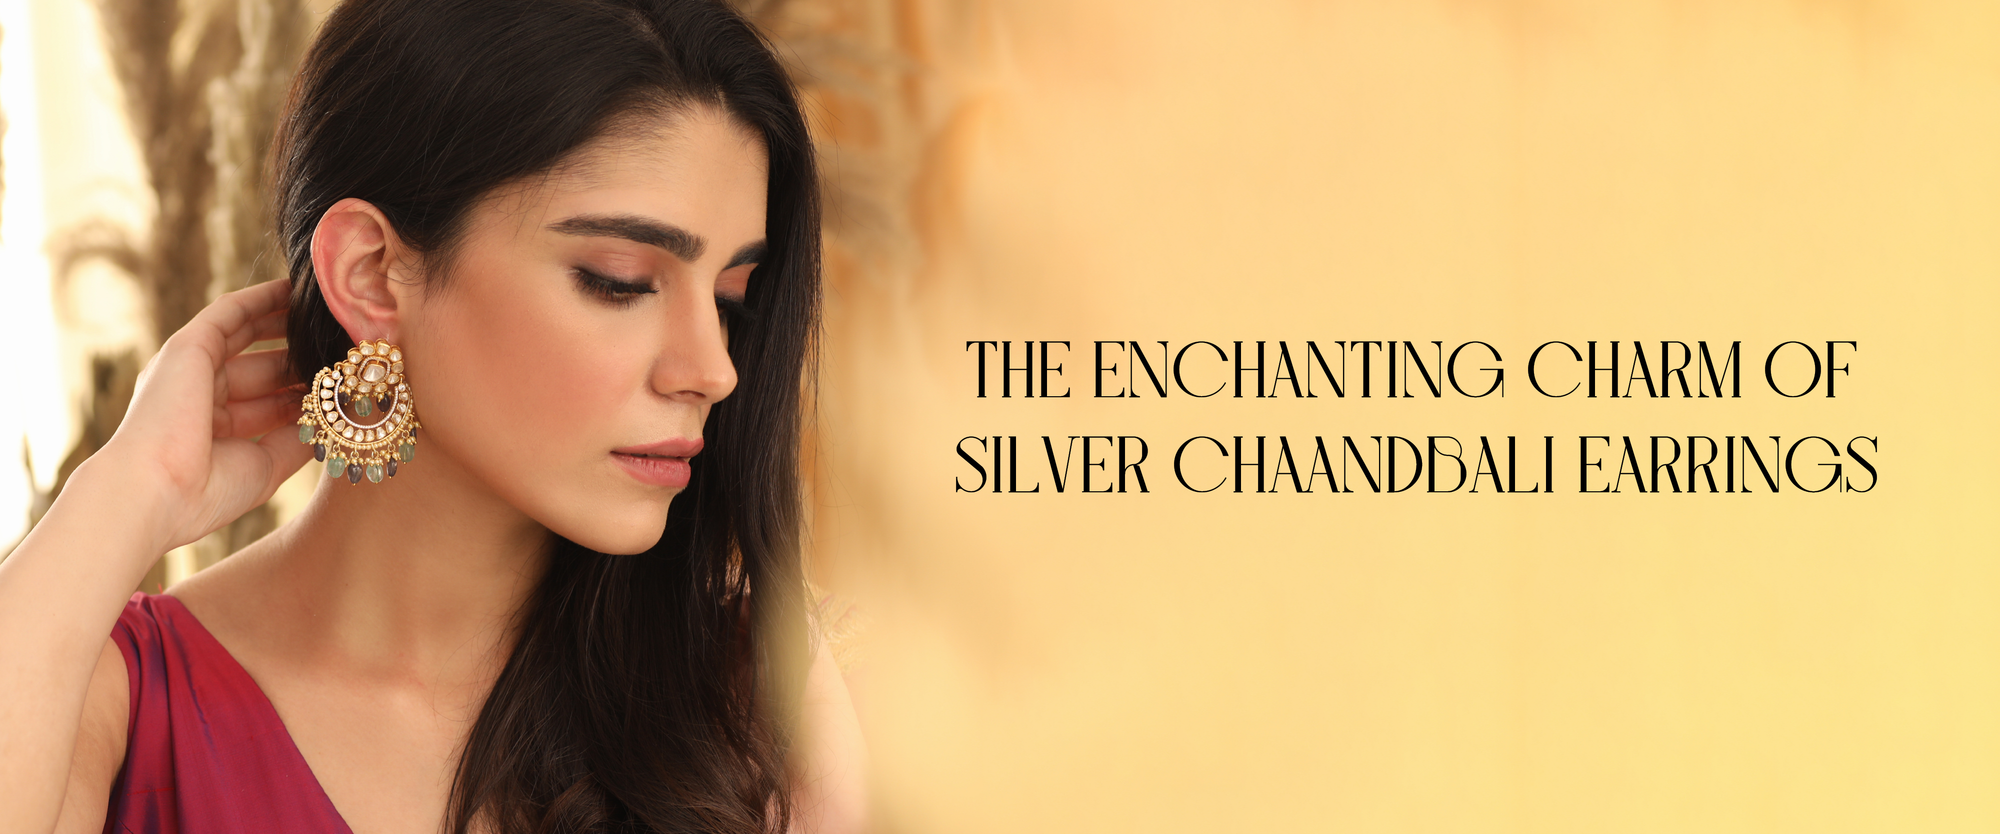 The enchanting charm of silver chaandbali earrings